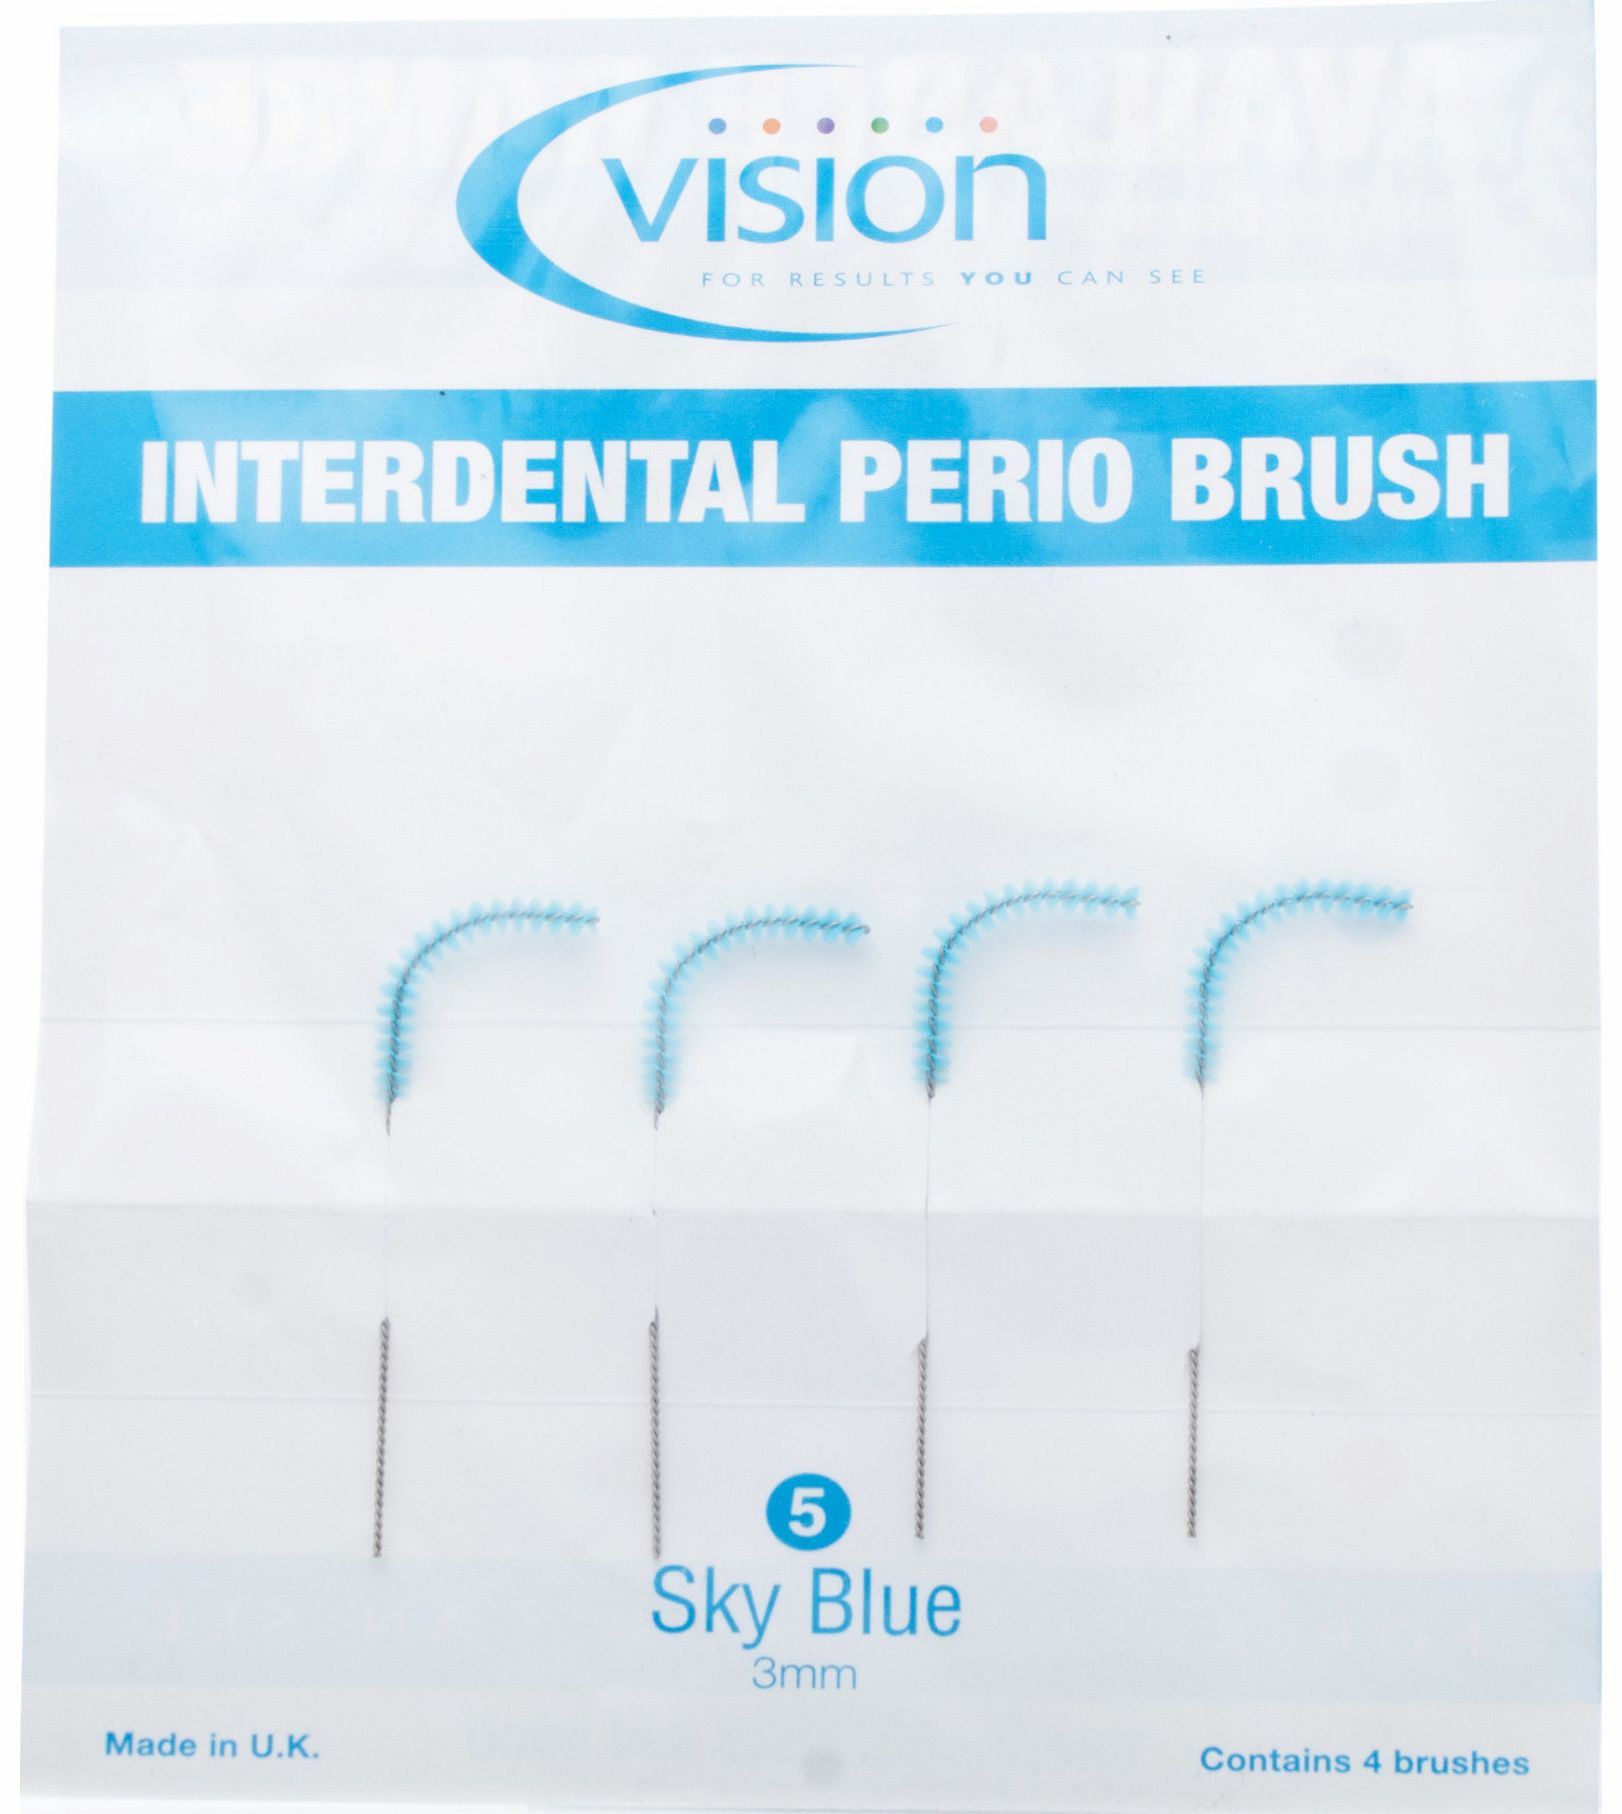 Interdental Perio Brushes - 3mm Sky Blue